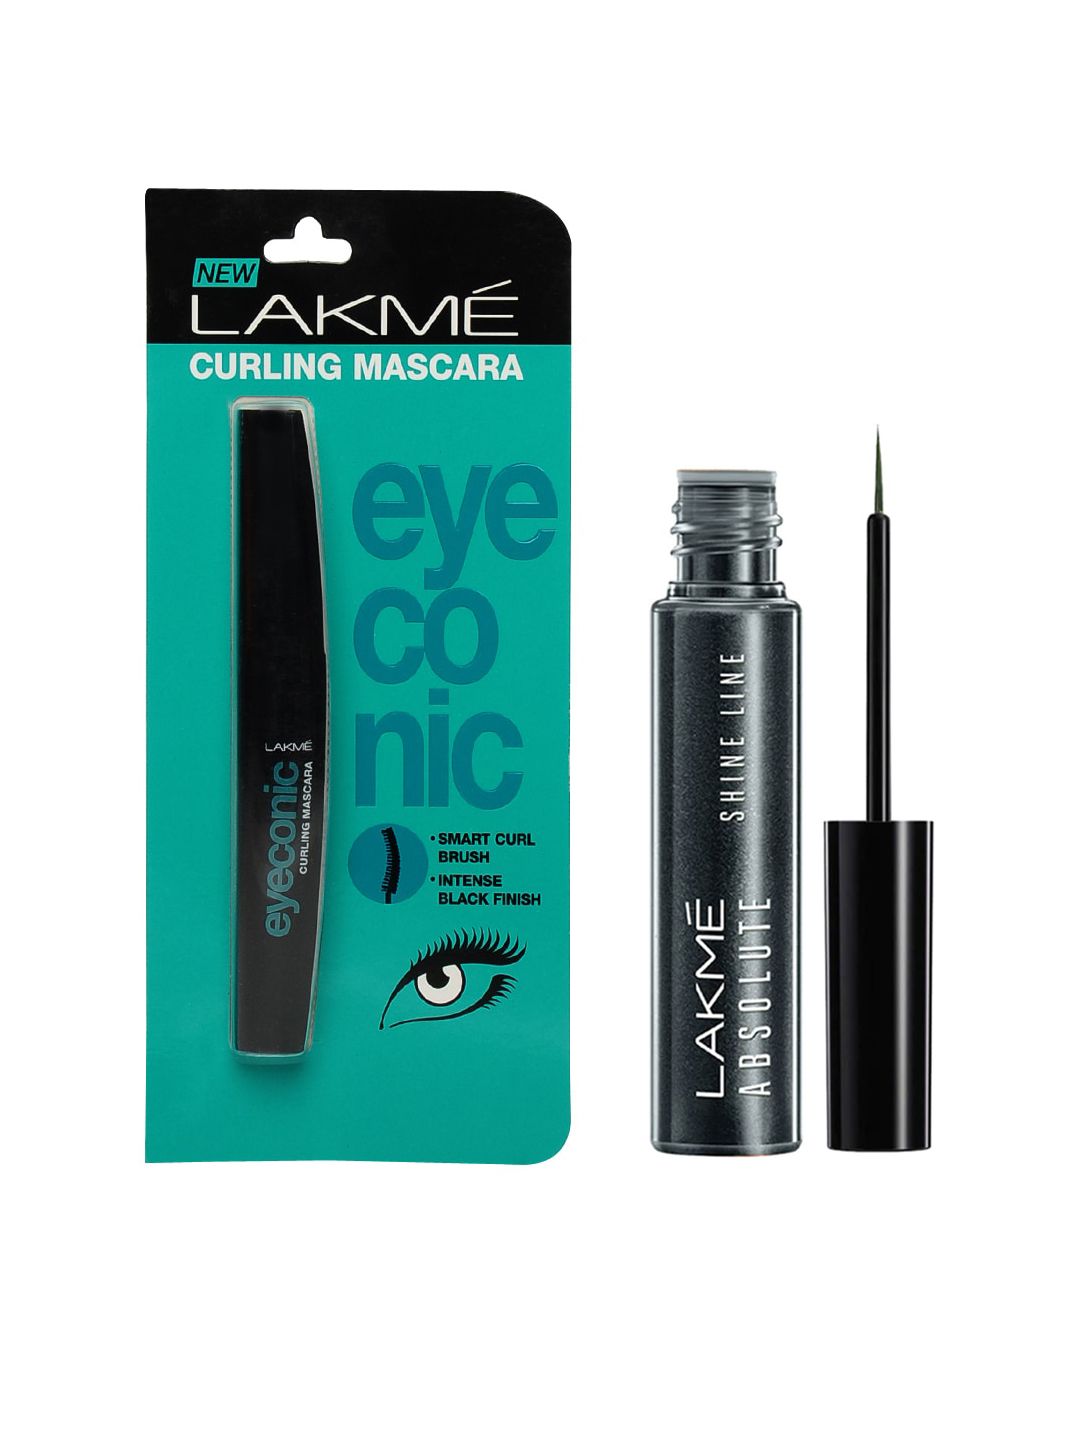 Lakme Set of 2 Mascara & Eyeliner Price in India